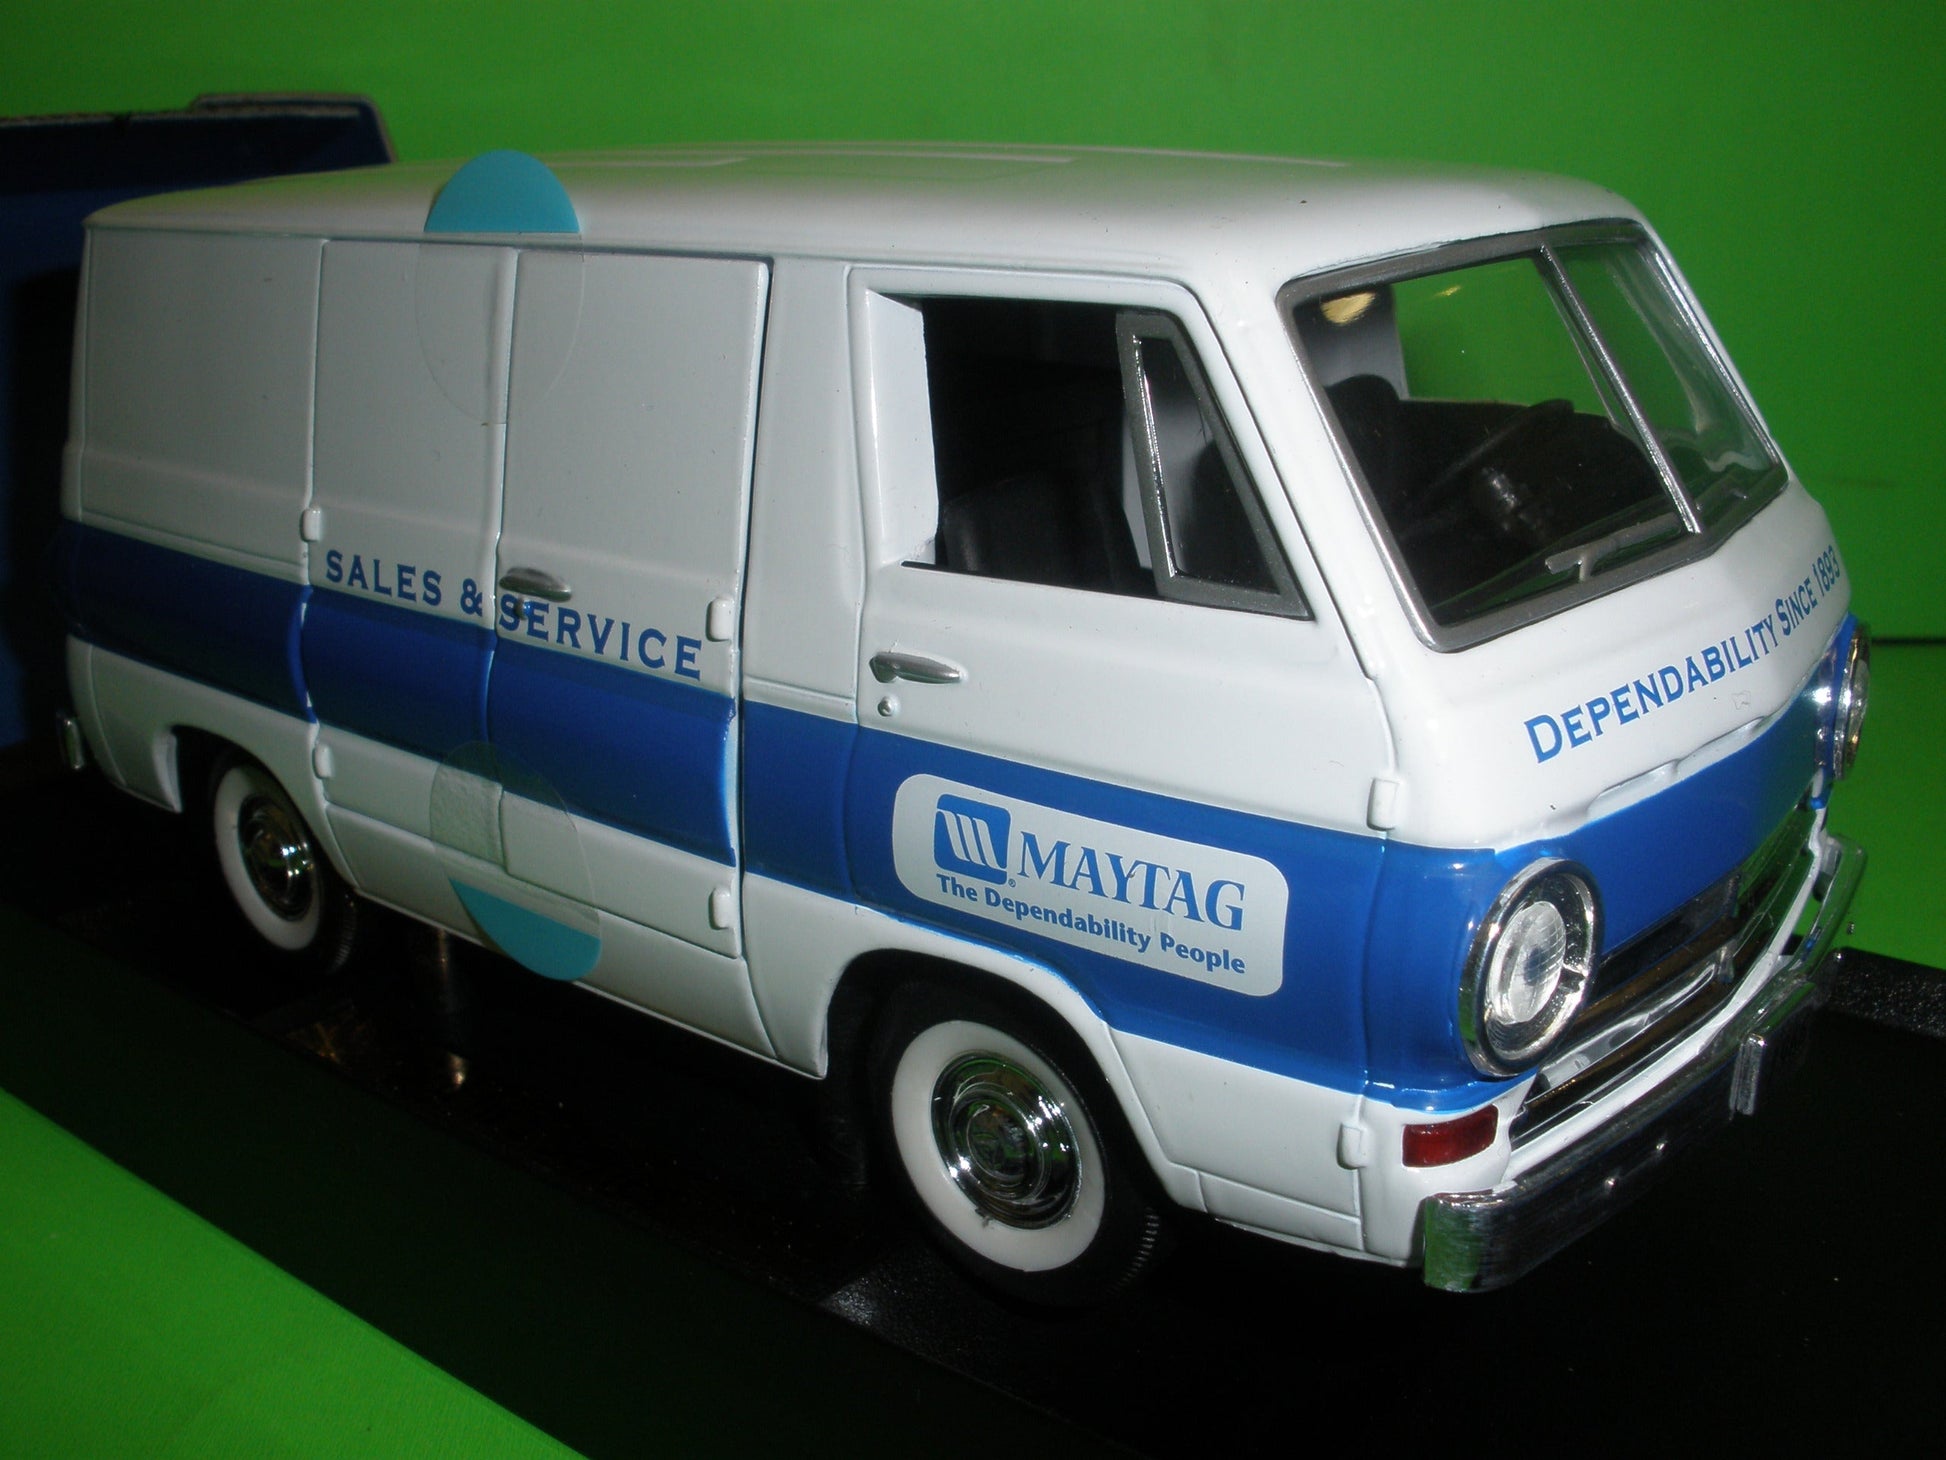 Maytag Sales & Service 1966 Dodge A100 Panel Van